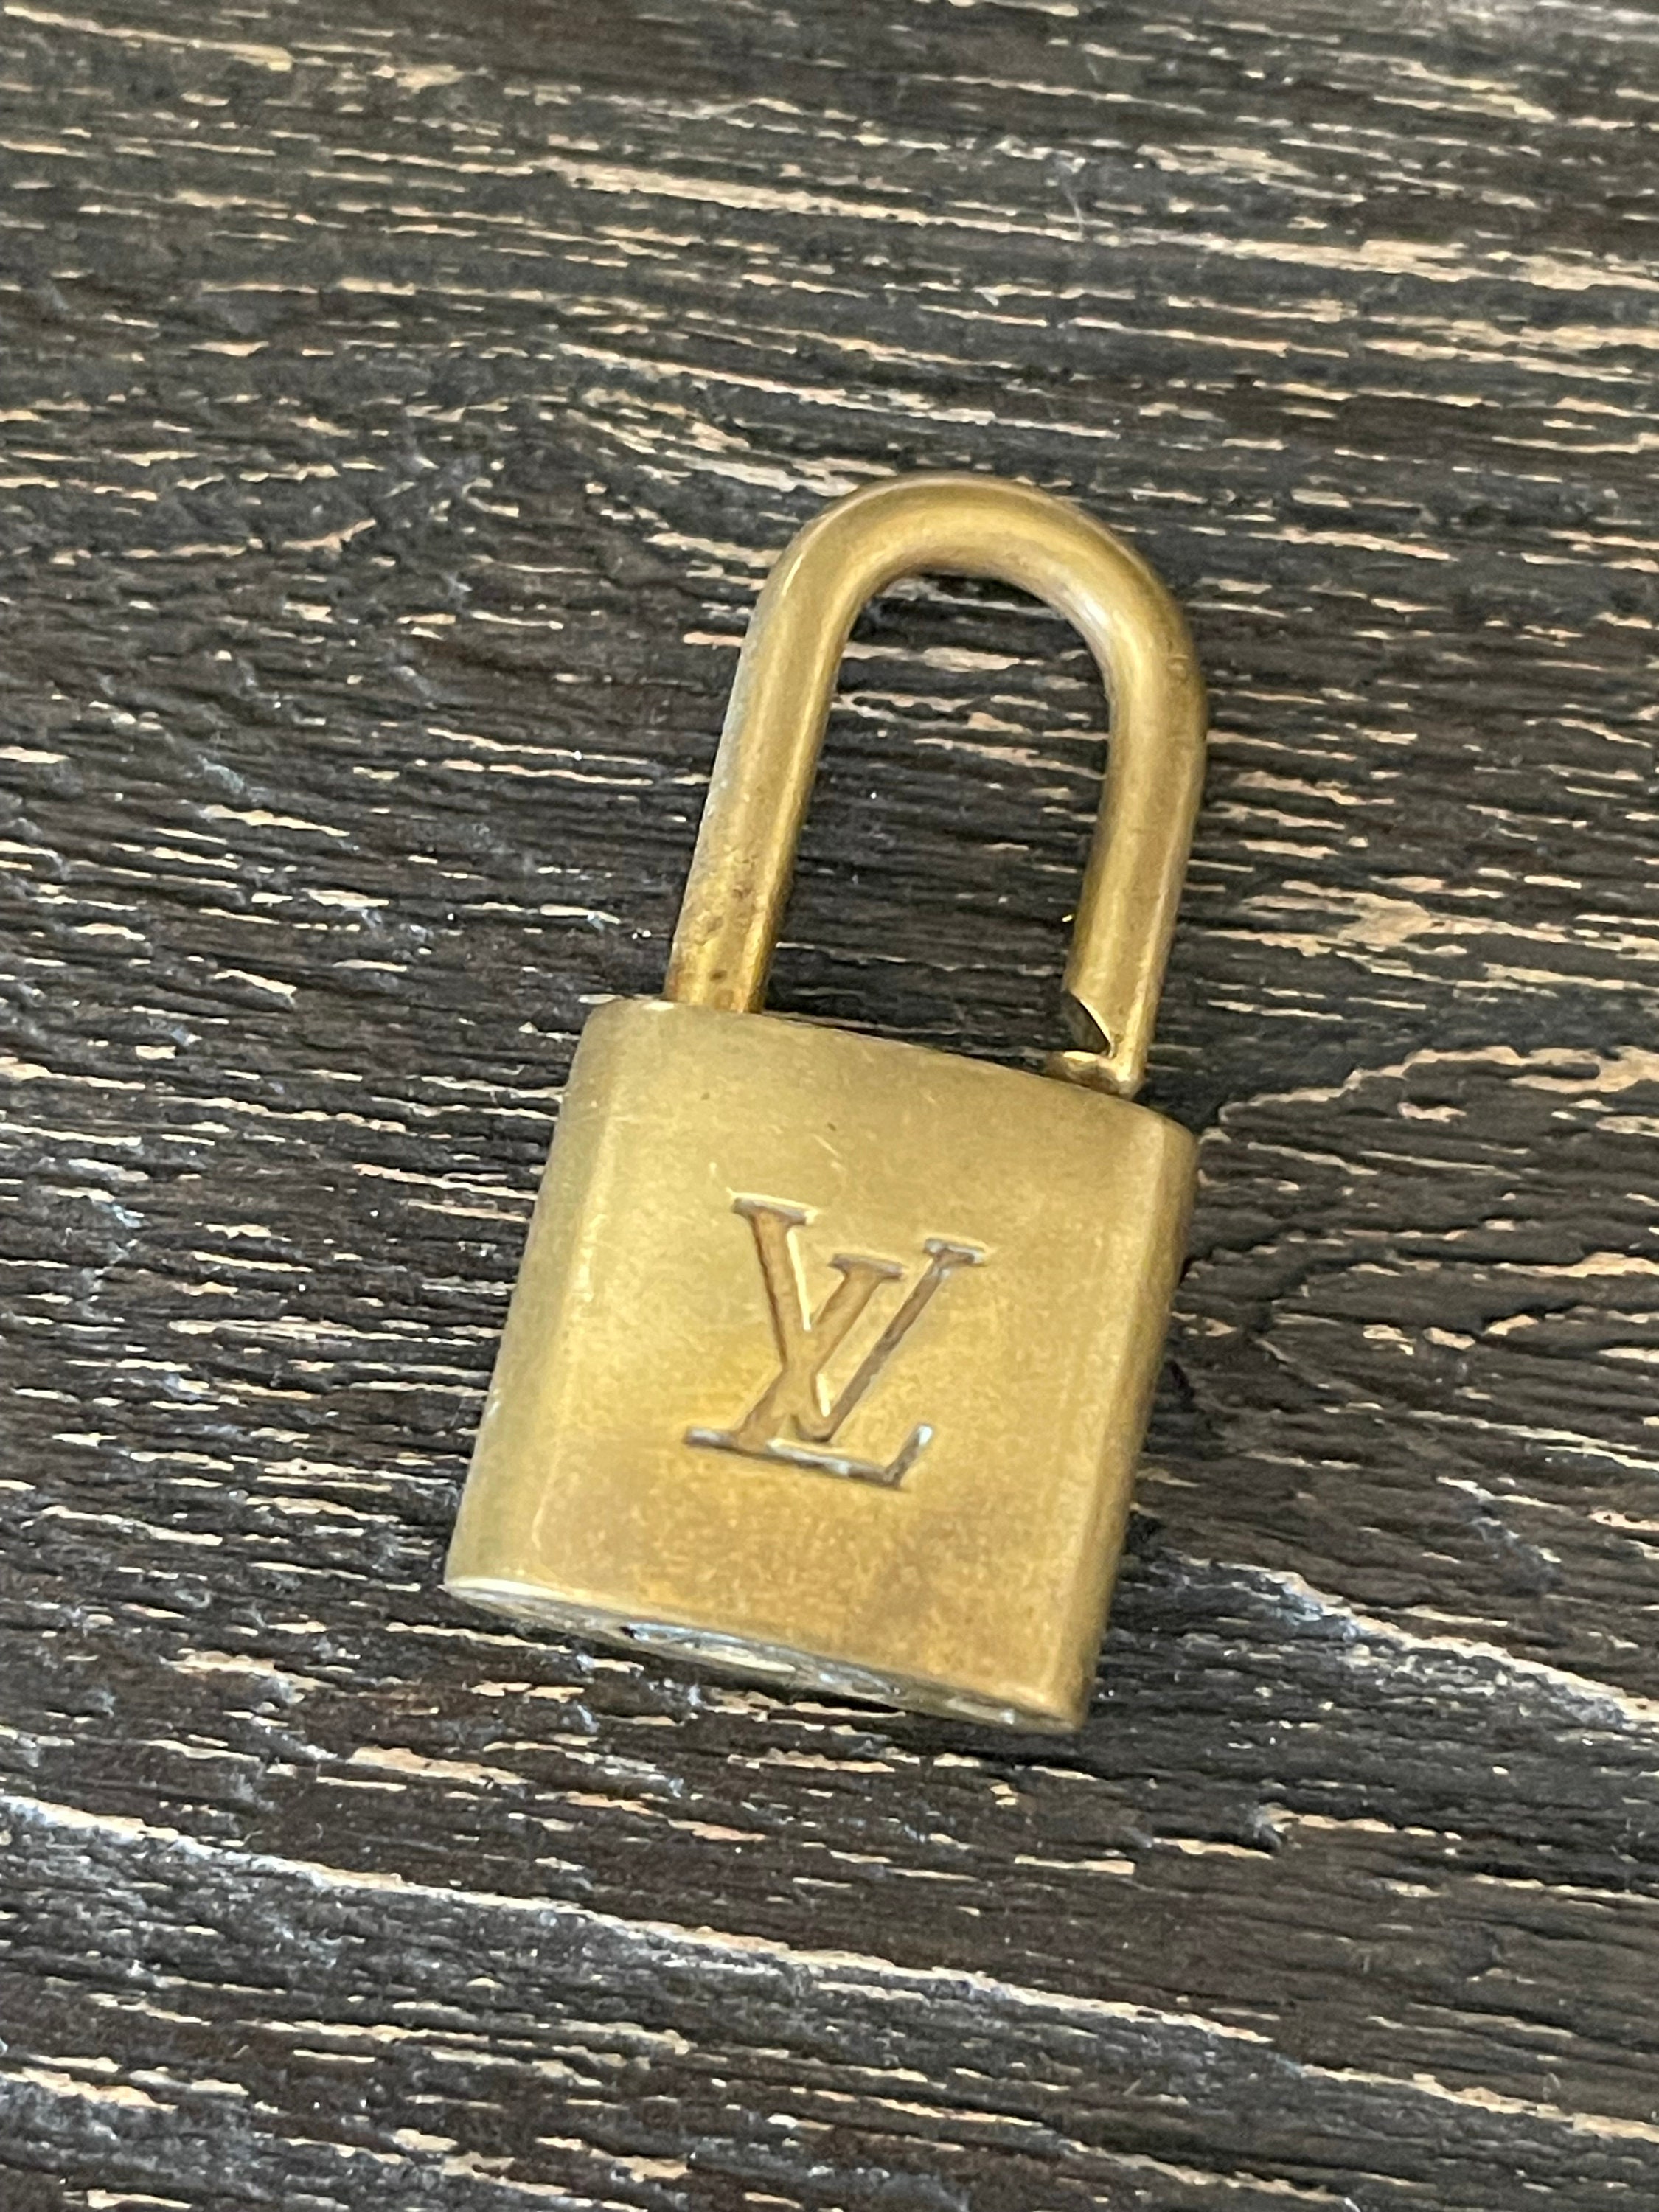 LOUIS VUITTON Brass Gold Padlock with Matching Key (LV Lock Number 314)